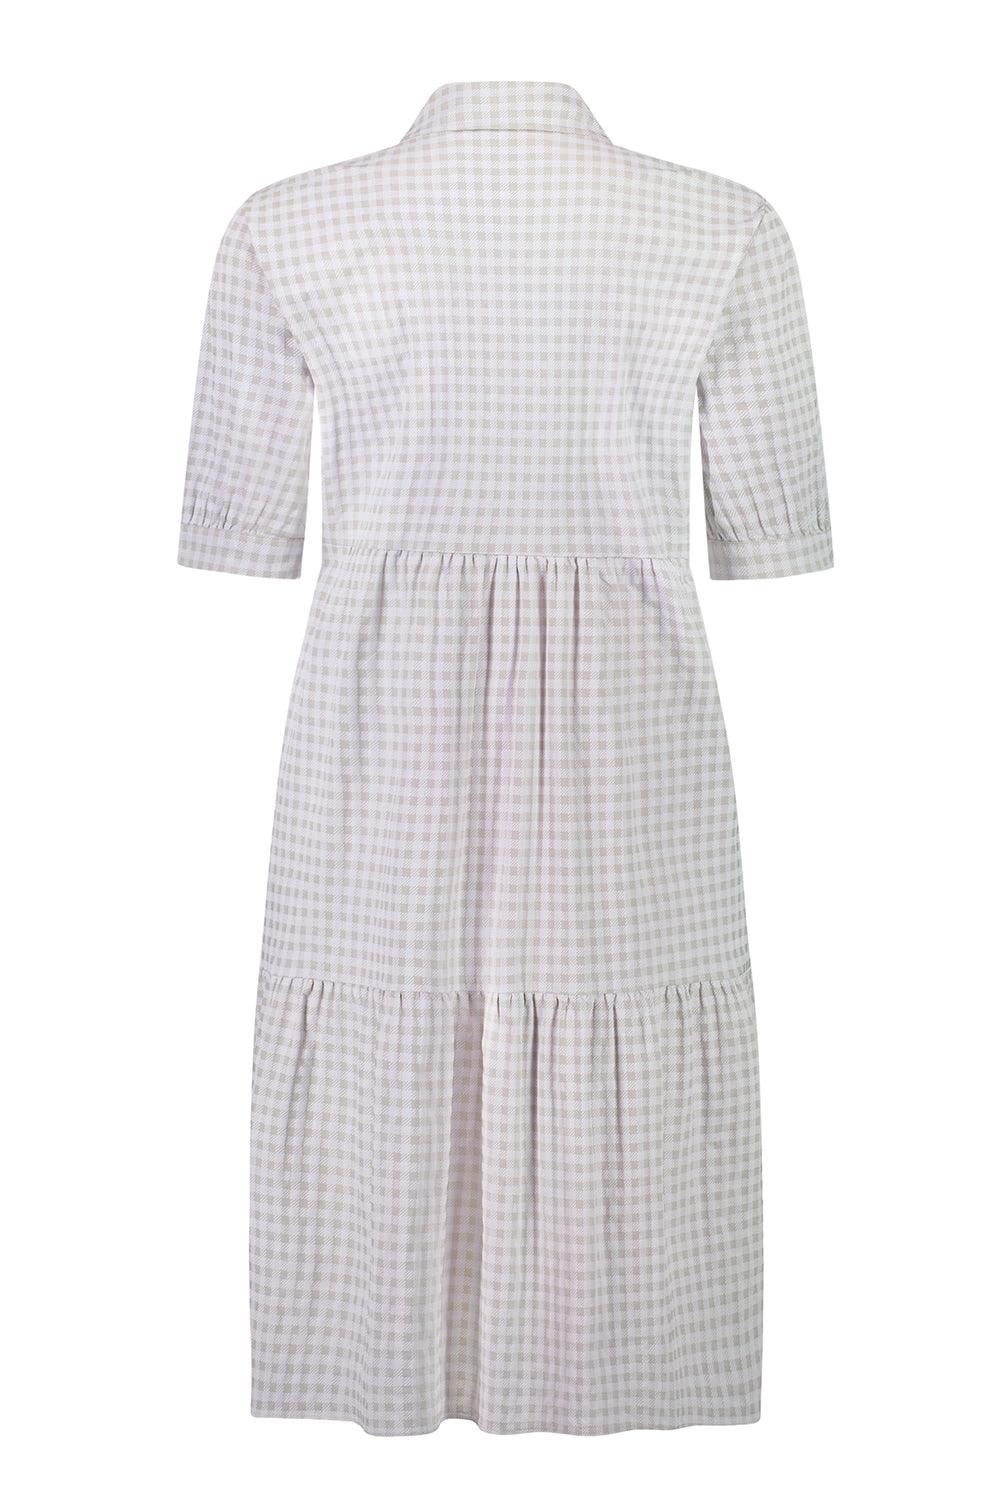 Acrobat Gingham Kirby Dress - Pumice - Dress VERGE